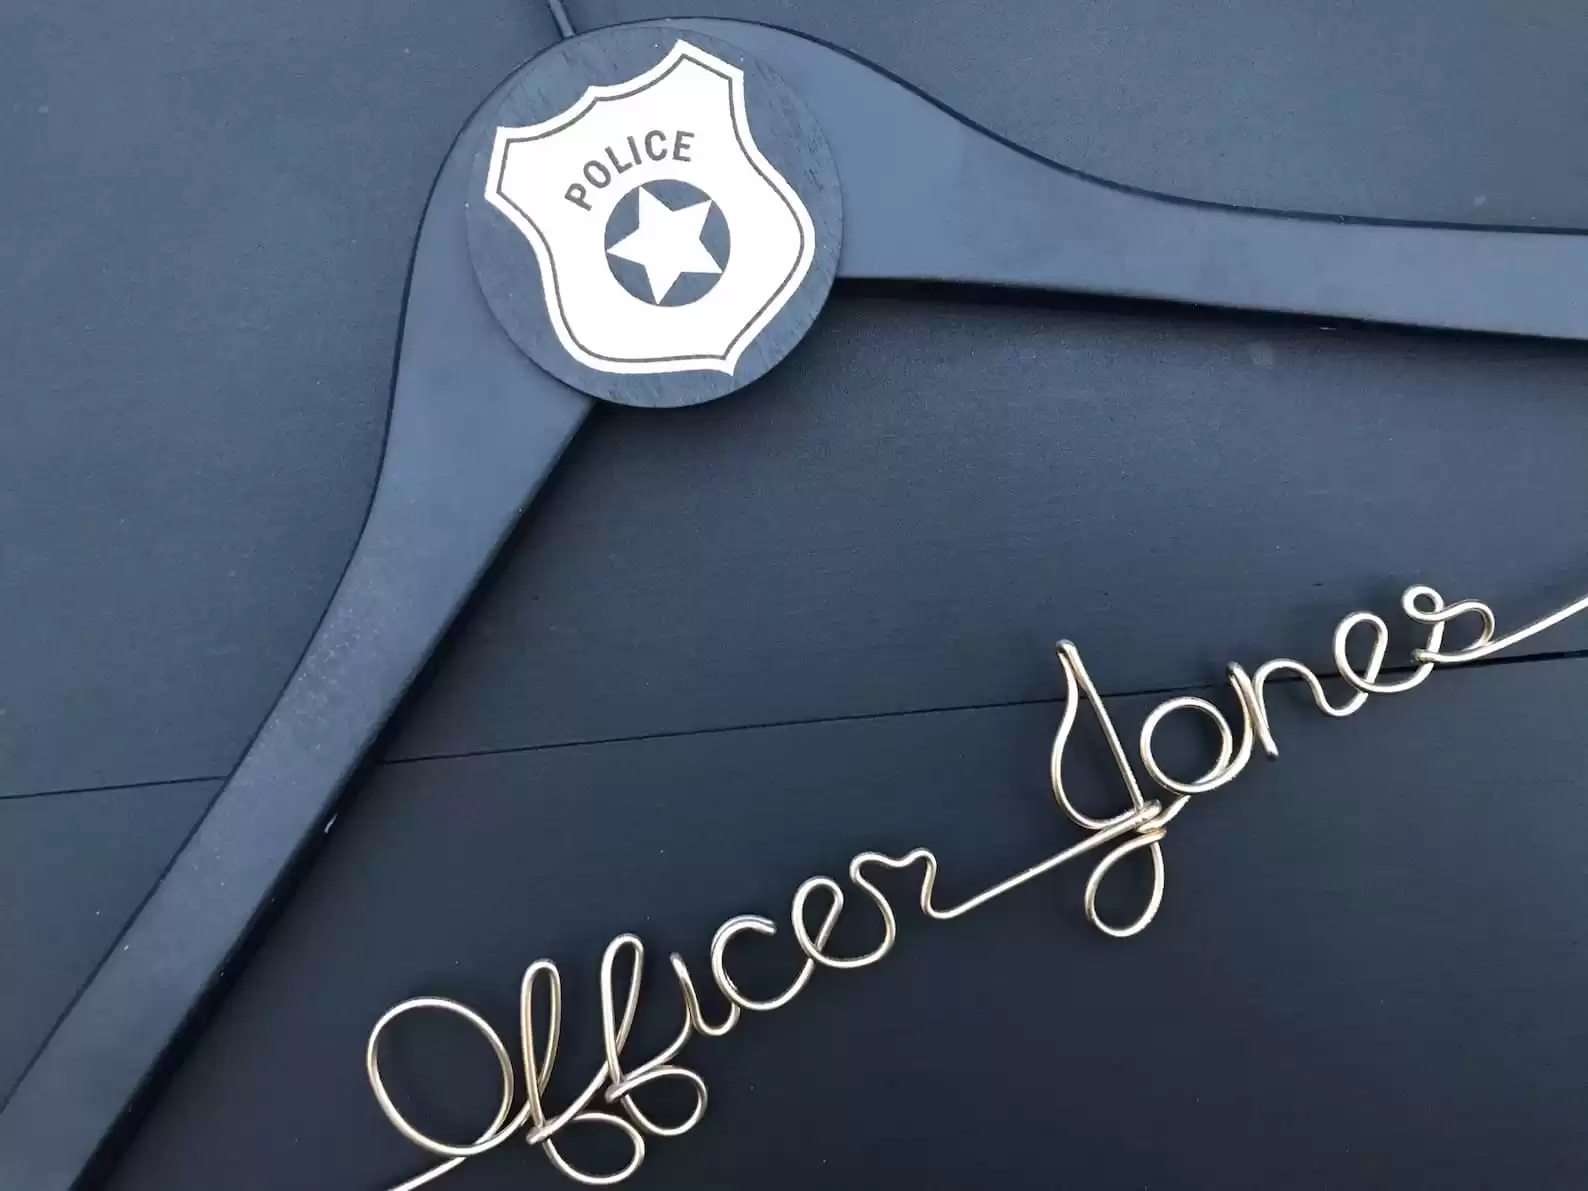 Police Academy Graduation Gifts